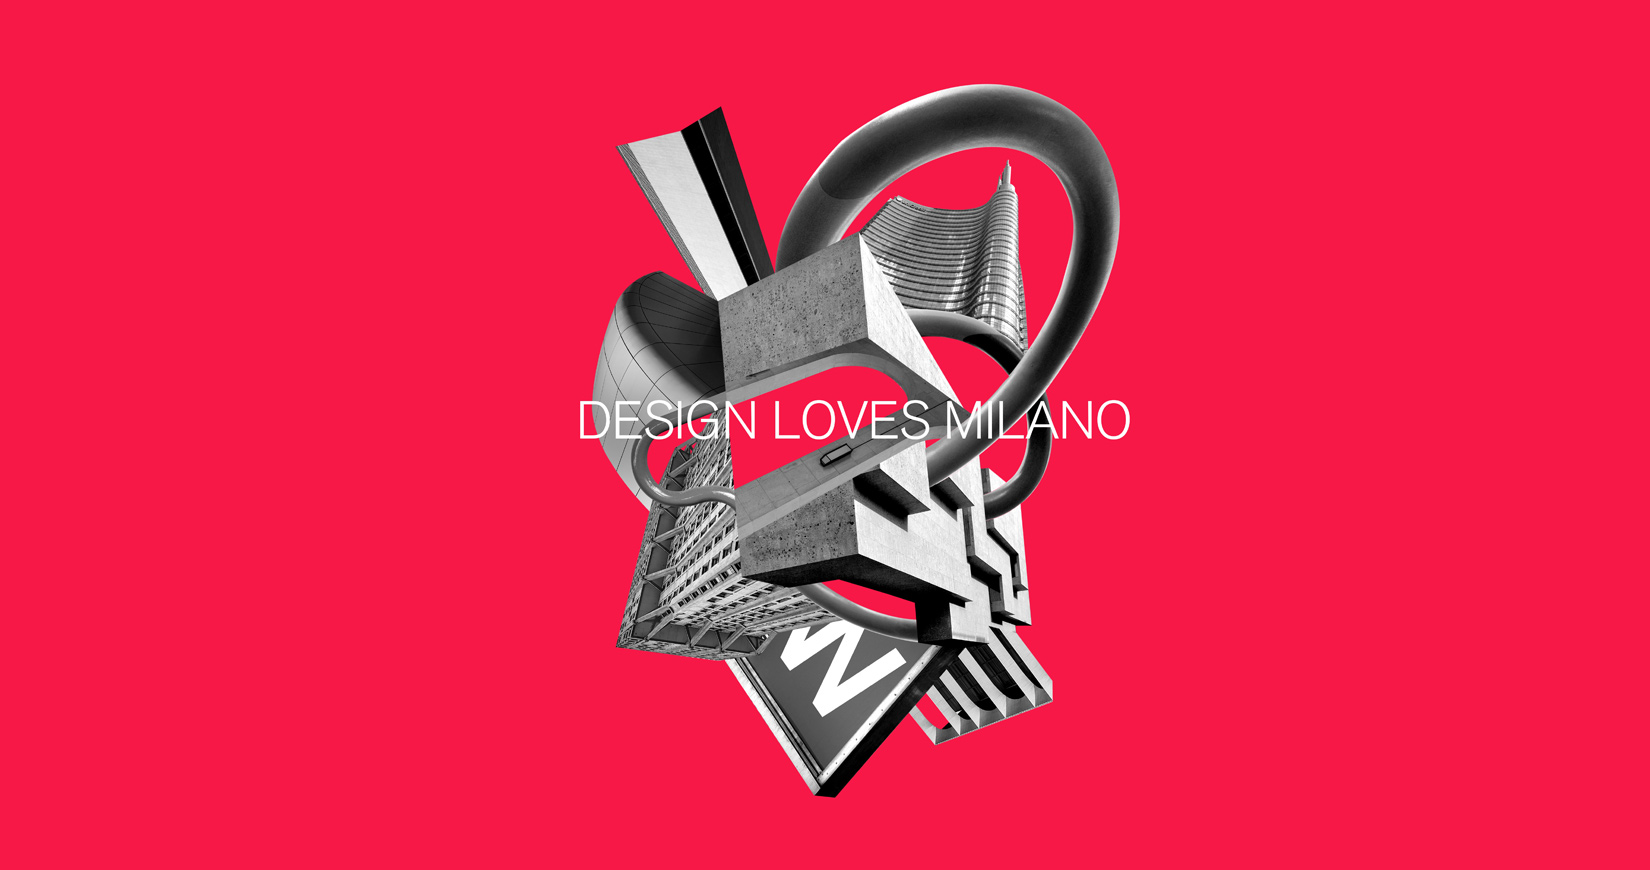 Design Loves Milano Online Auction